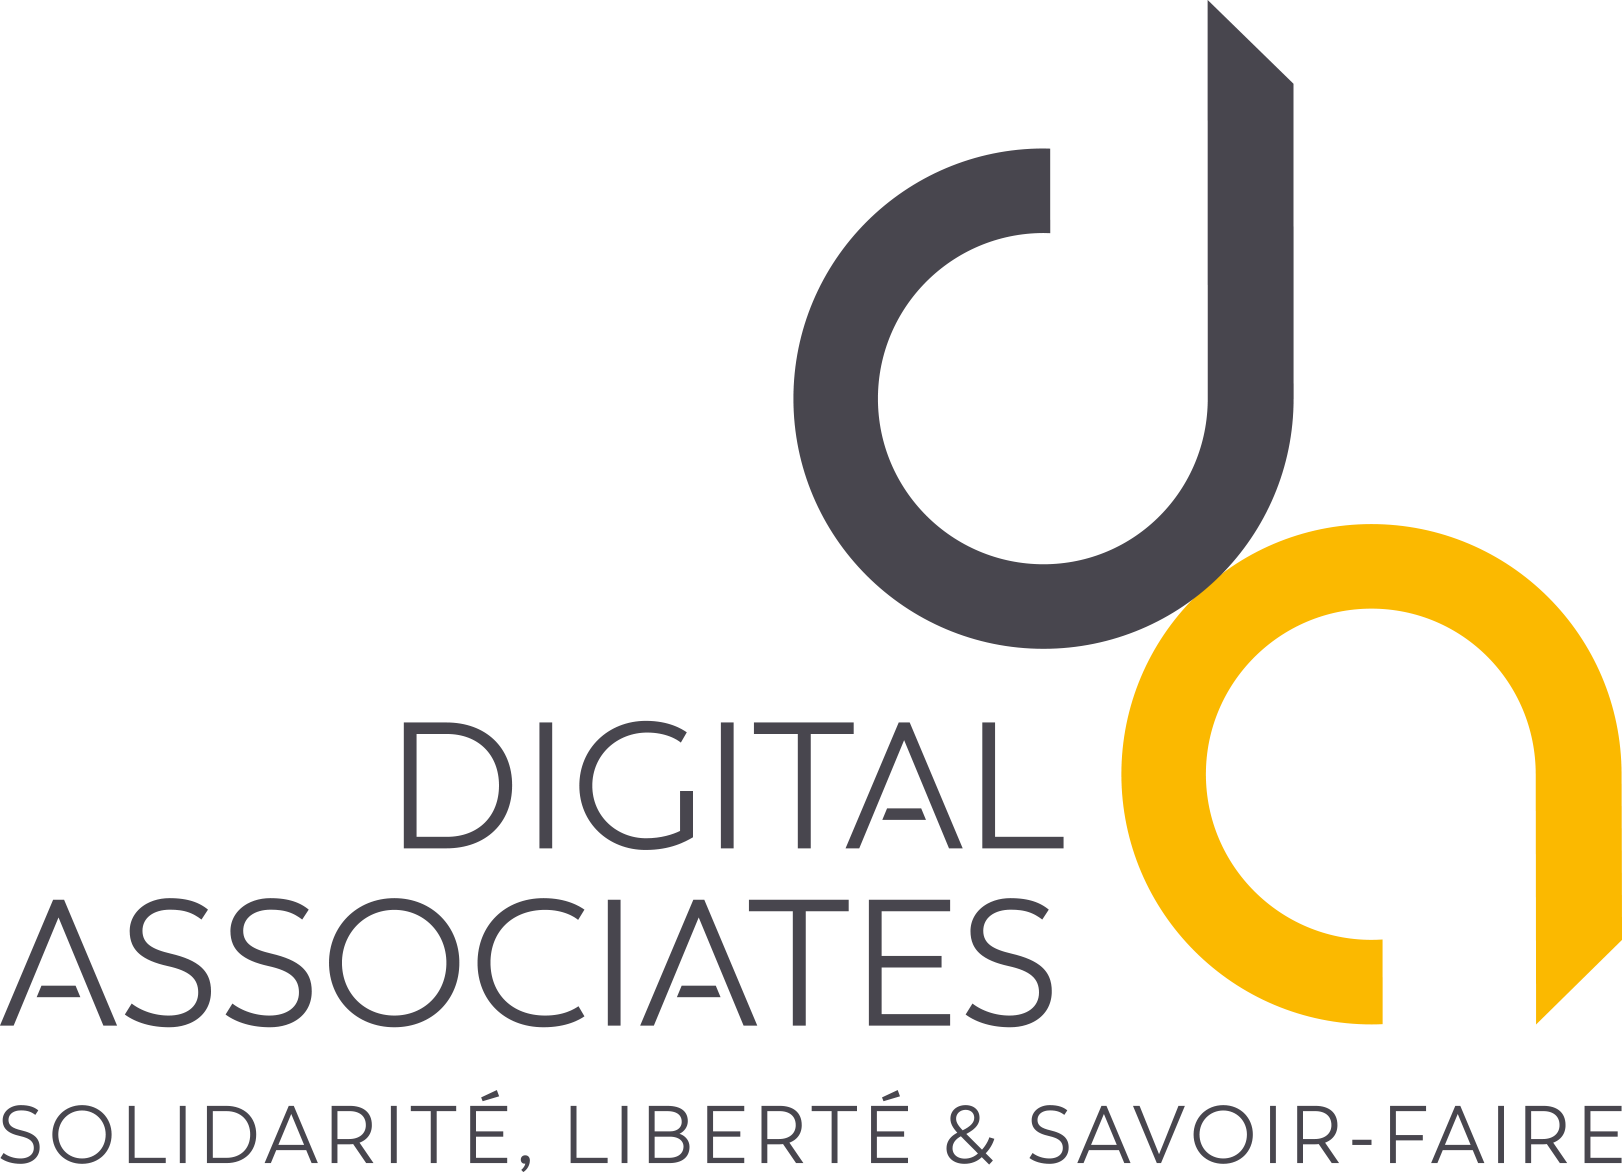 Digital Associates